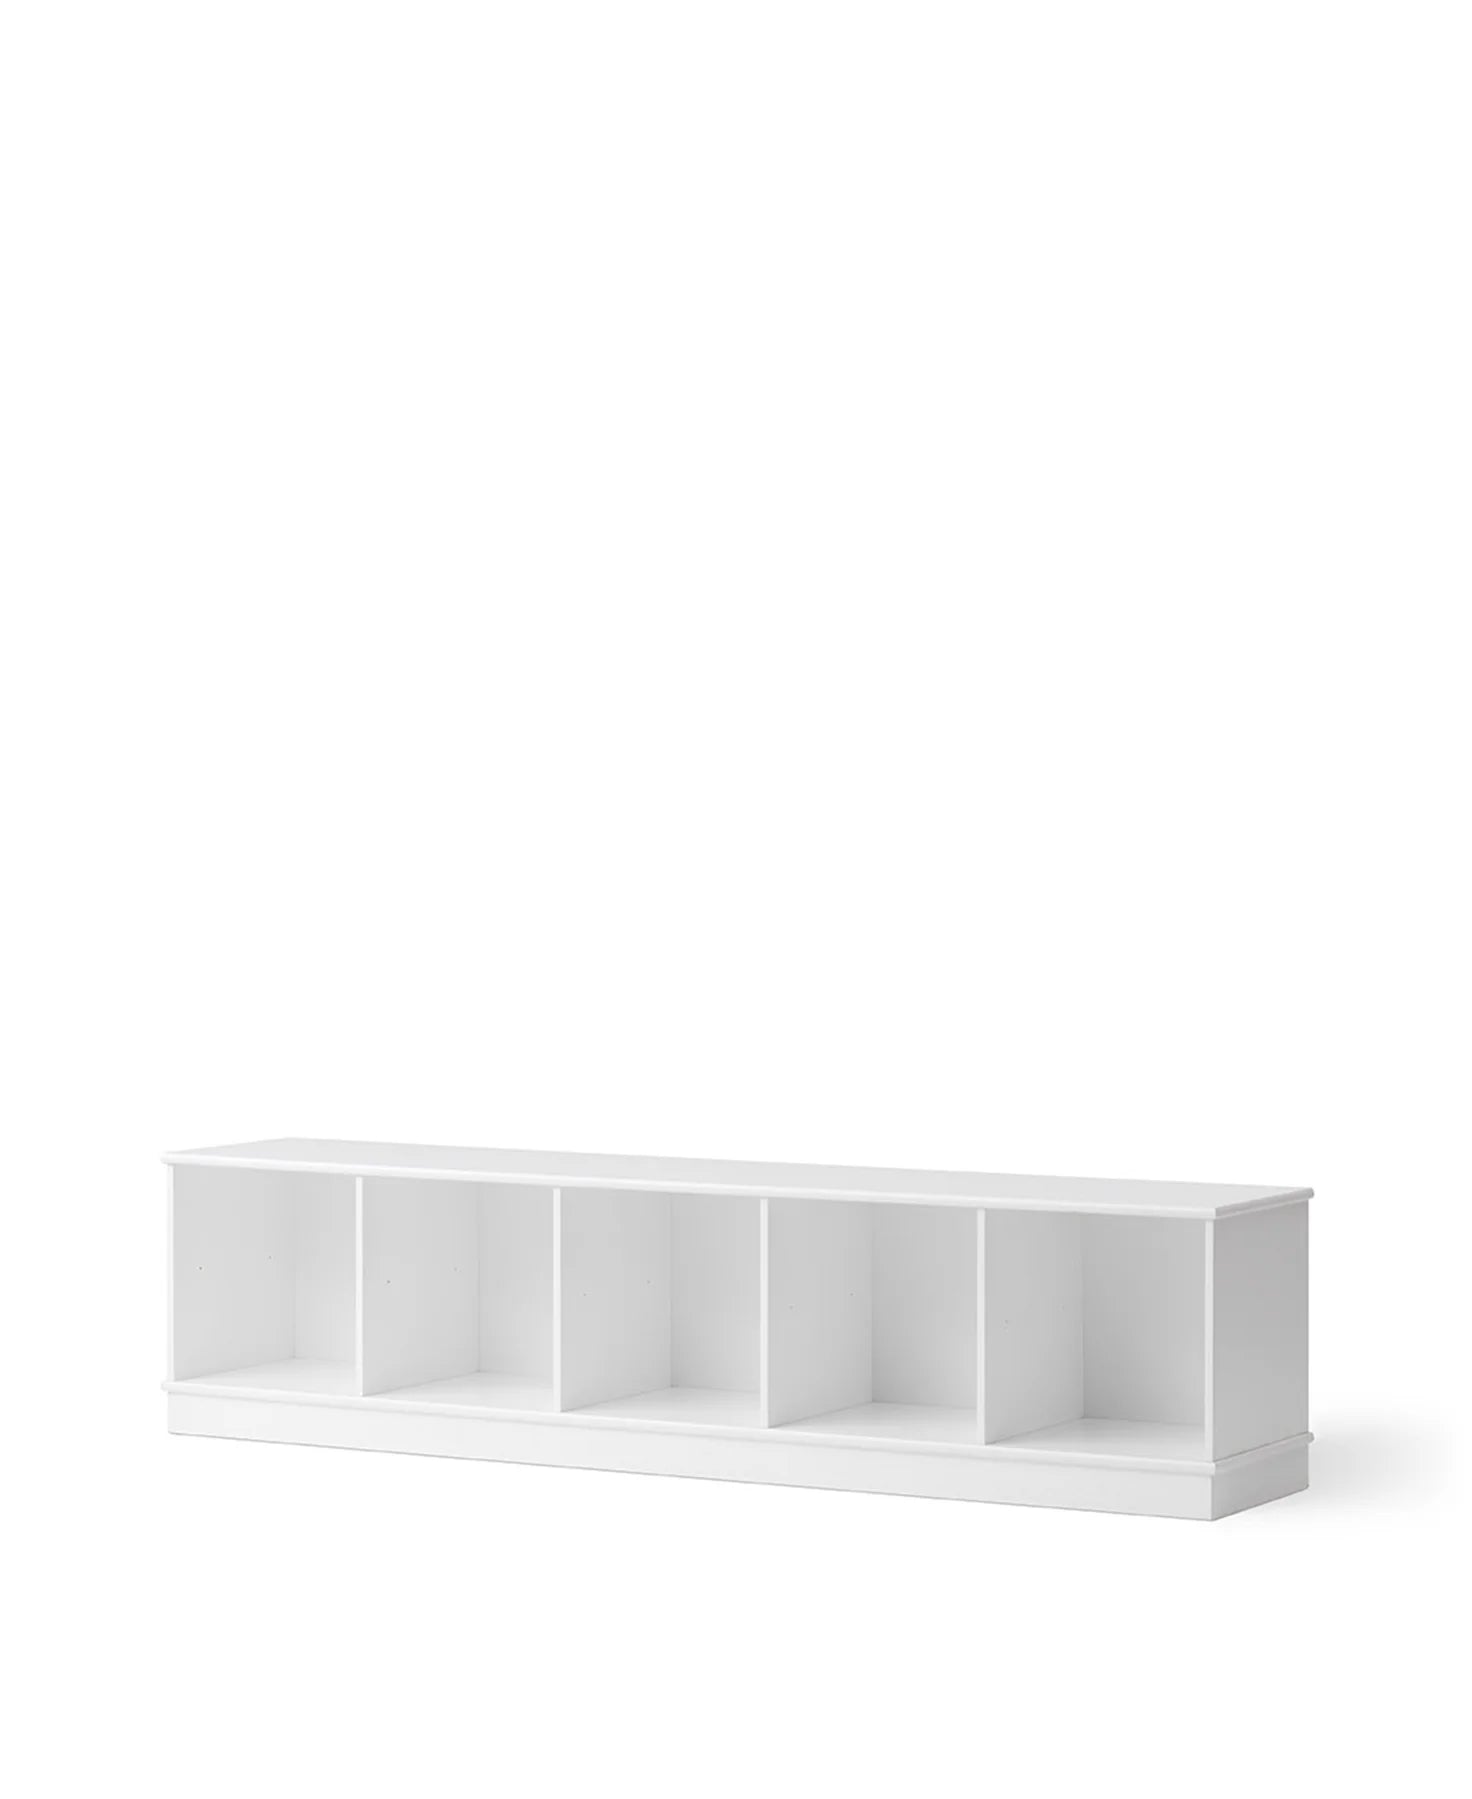 Oliver Furniture - Wood Regal 5x1 mit Sockel in weiss